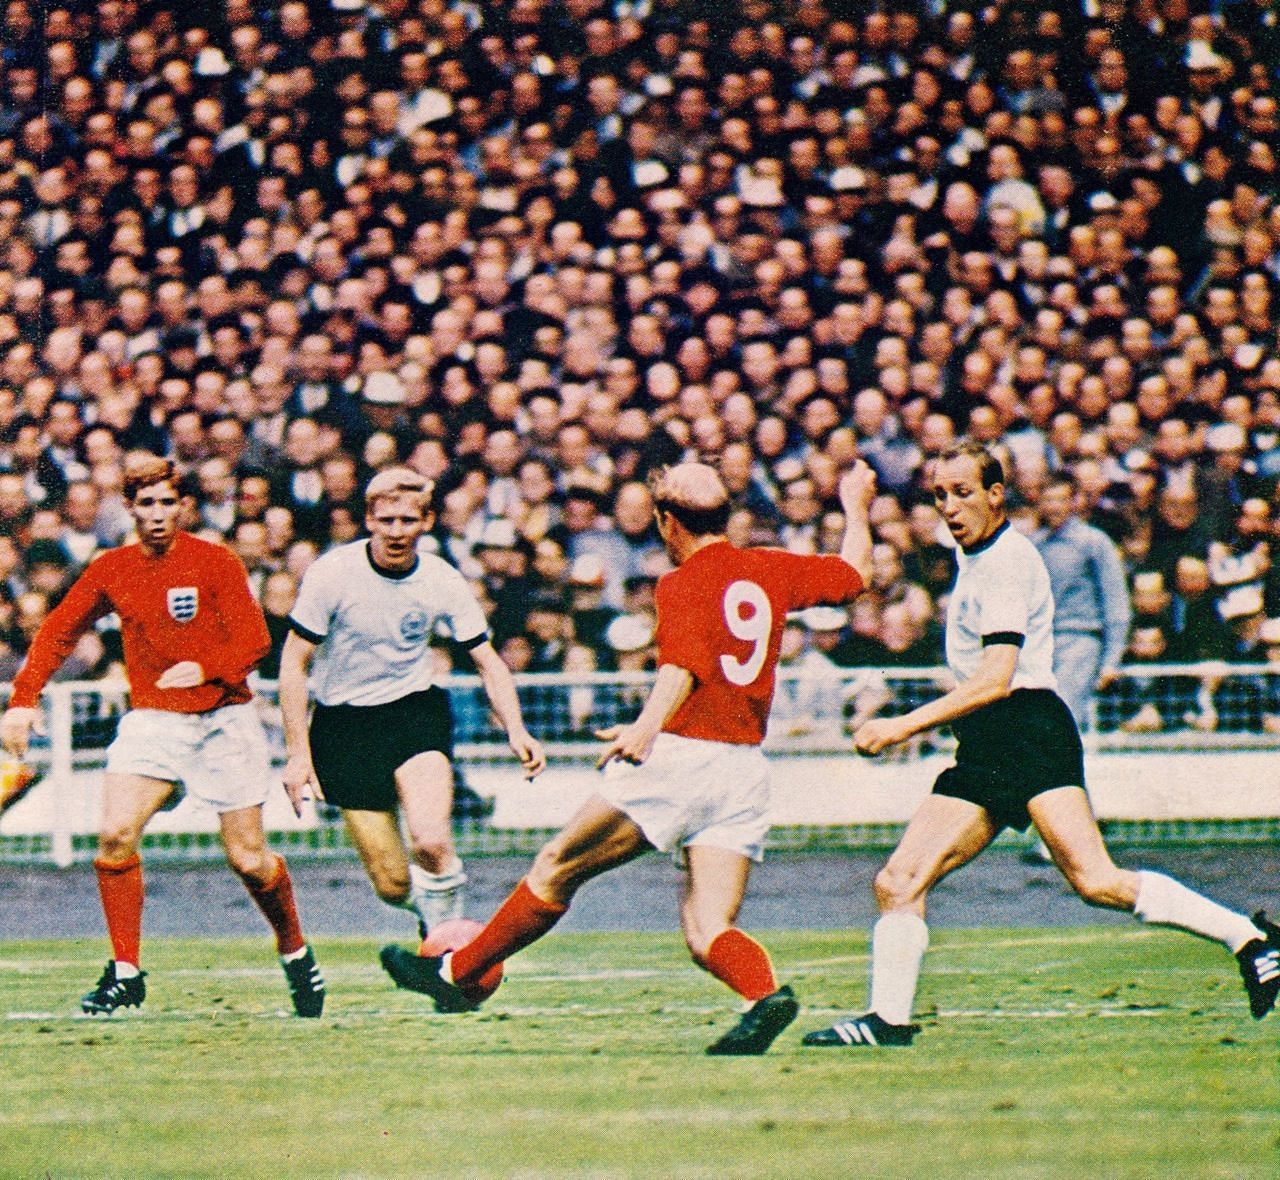 England vs West Germany, 1966